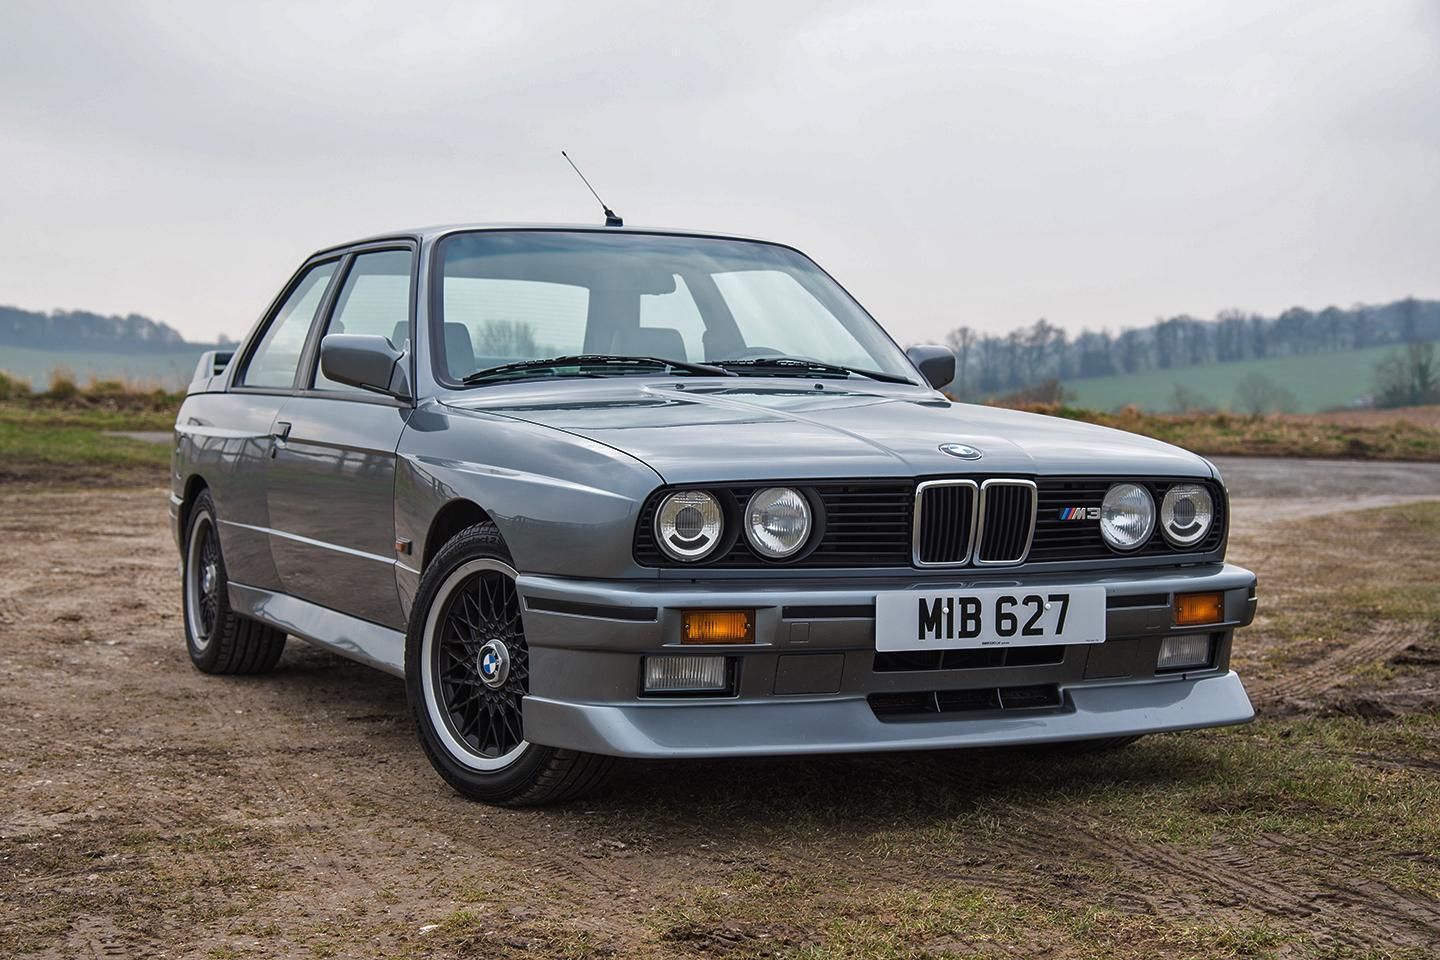 BMW E36 M3 review: the sensible buy